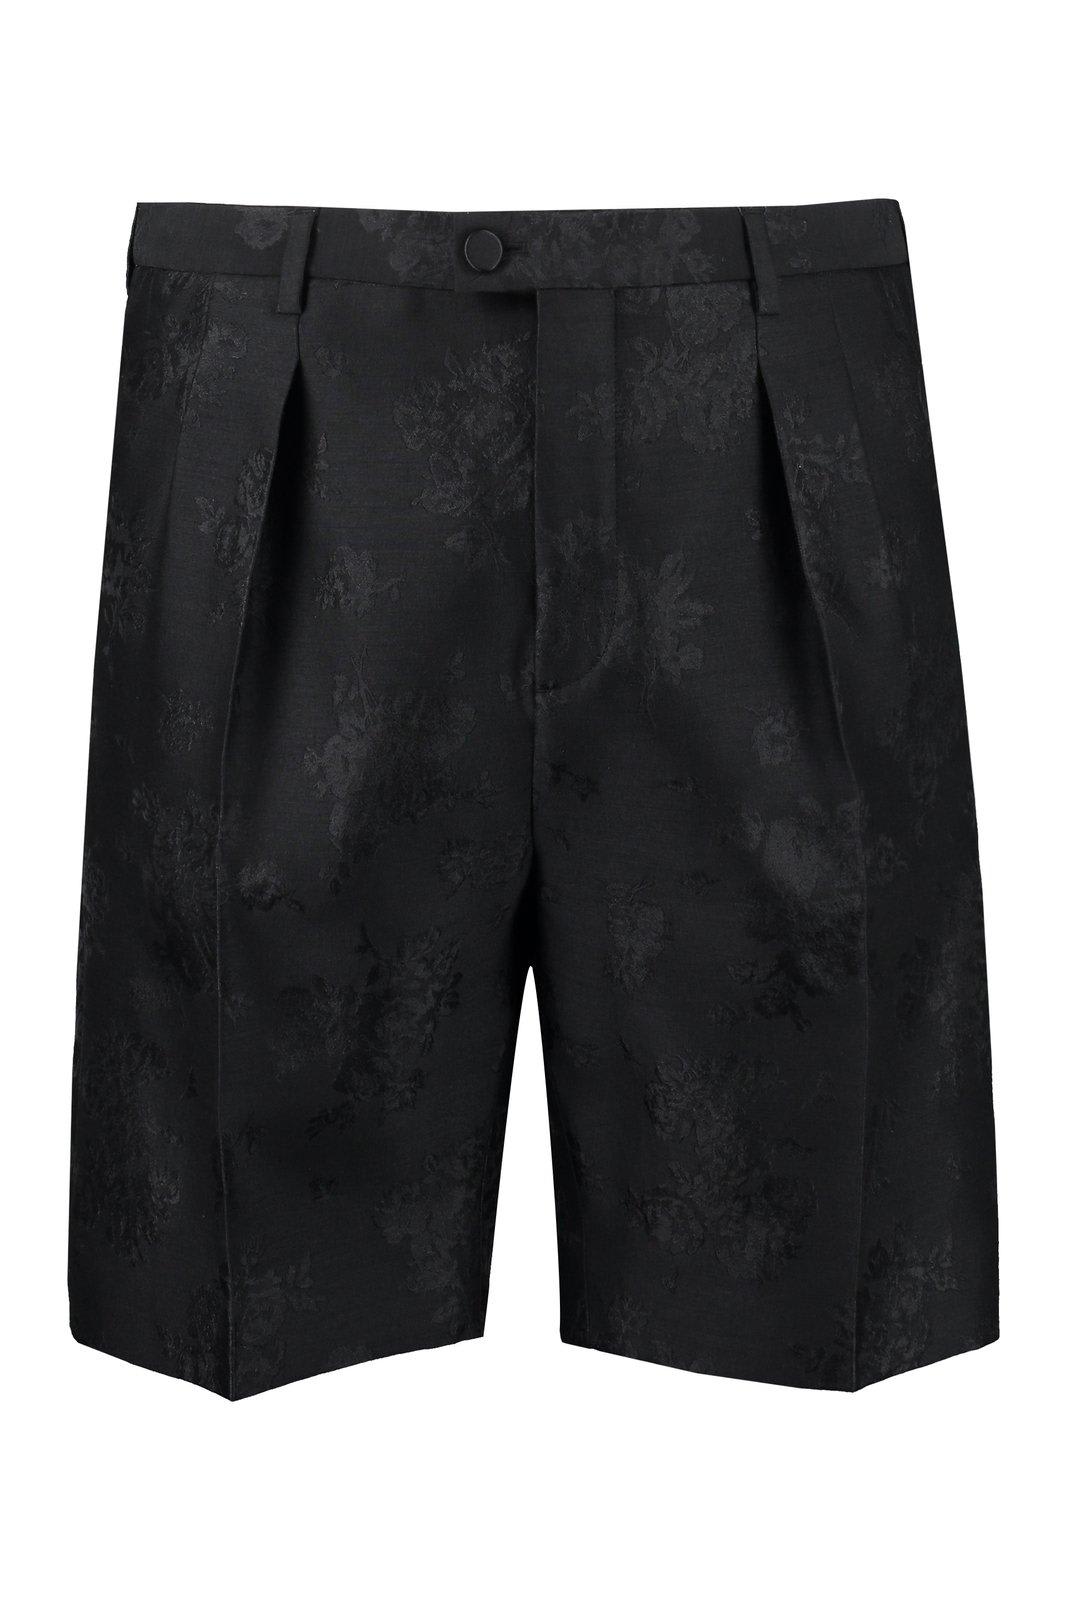 Saint Laurent High Waist Jacquard Shorts In Black